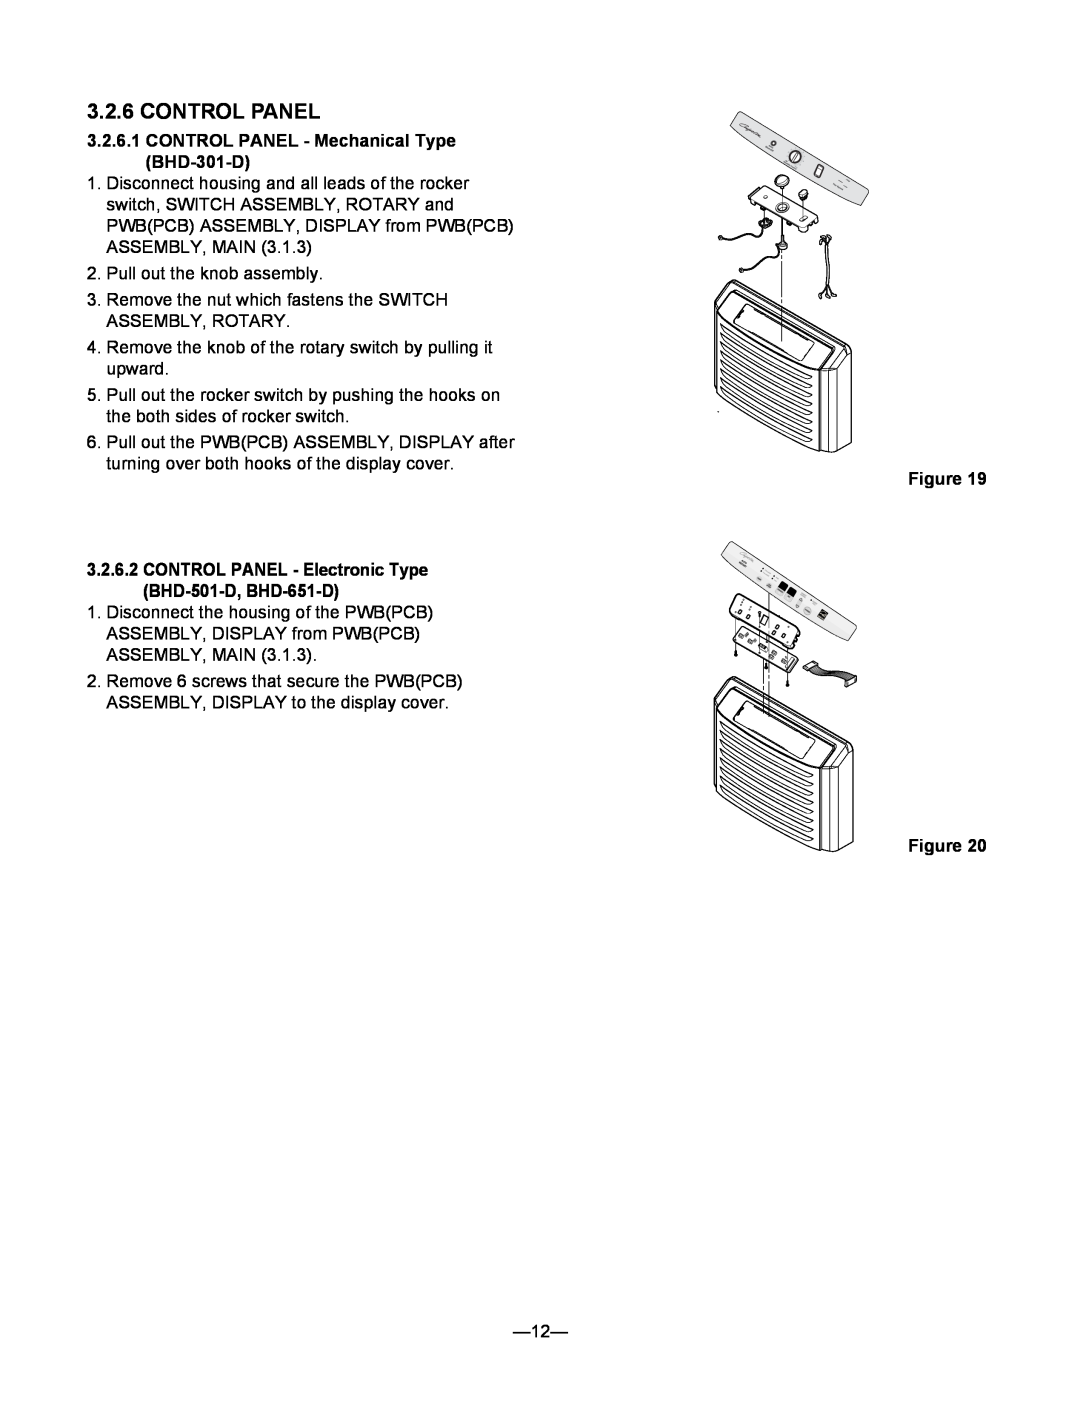 Heat Controller BHD-651-D, BHD-501-D service manual Control Panel, CONTROL PANEL - Mechanical Type BHD-301-D, Figure Figure 